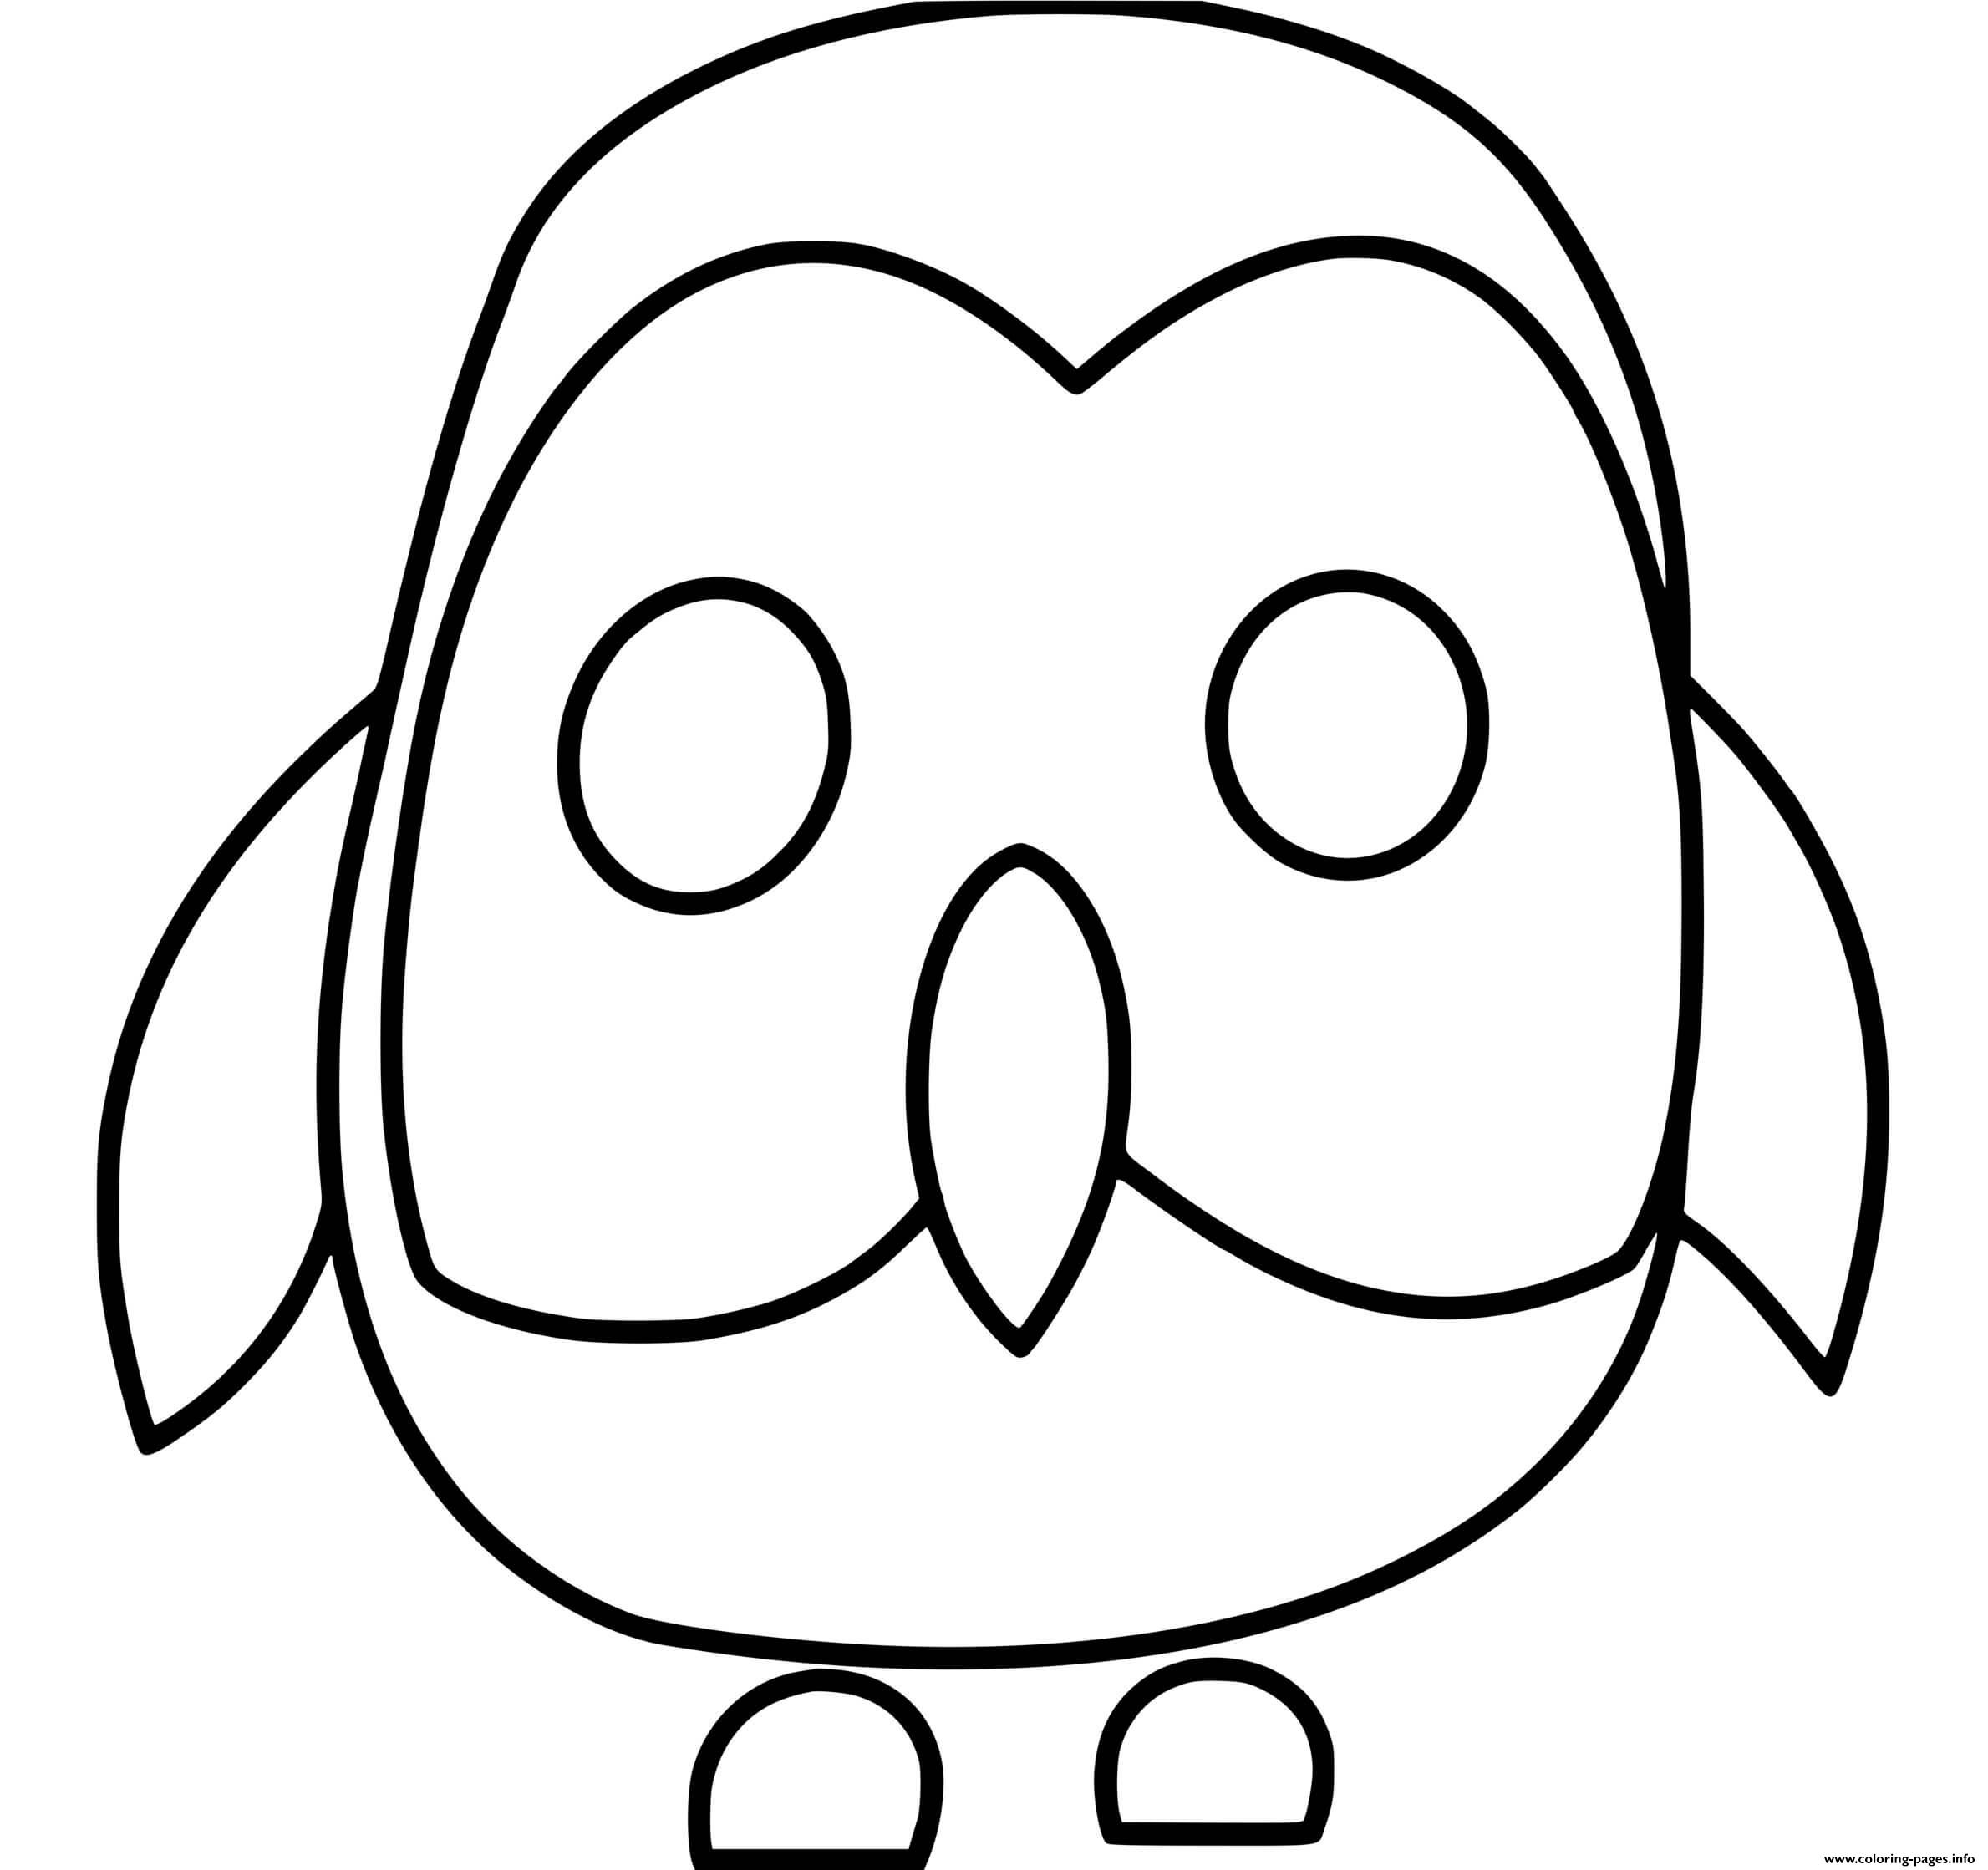 Roblox Adopt Me Owl coloring